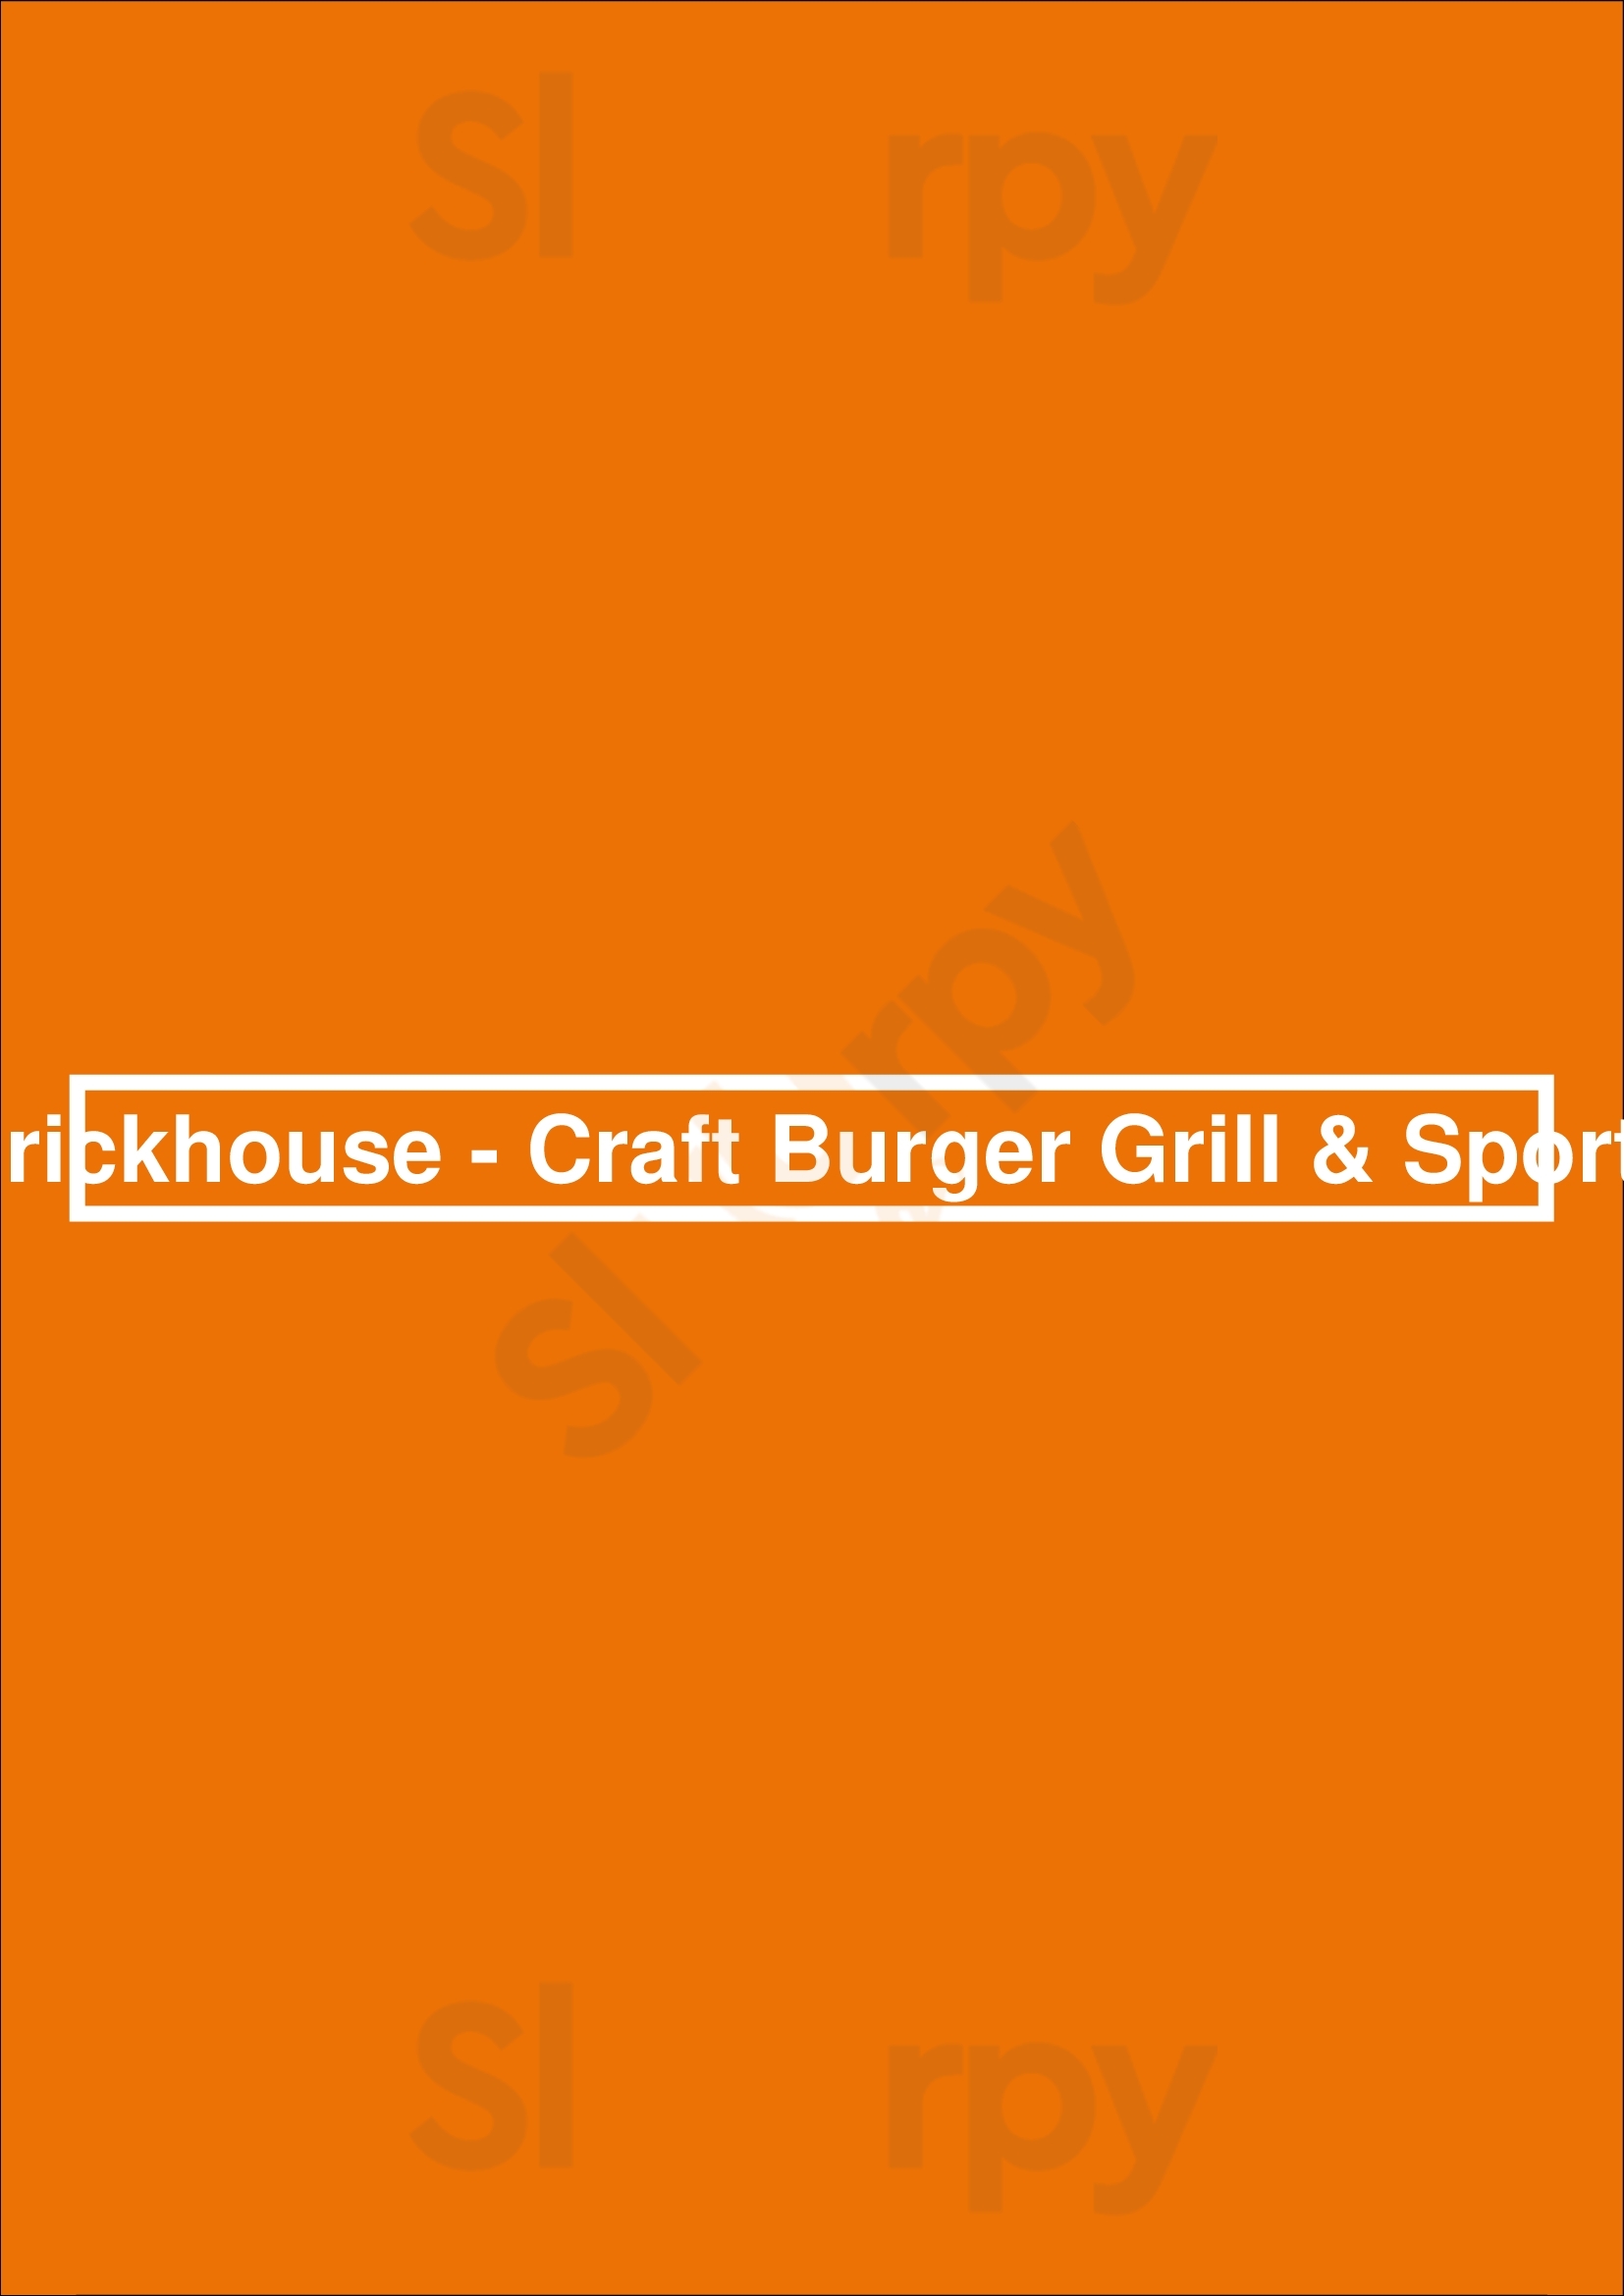 The Brickhouse - Craft Burger Grill & Sports Bar Peterborough Menu - 1